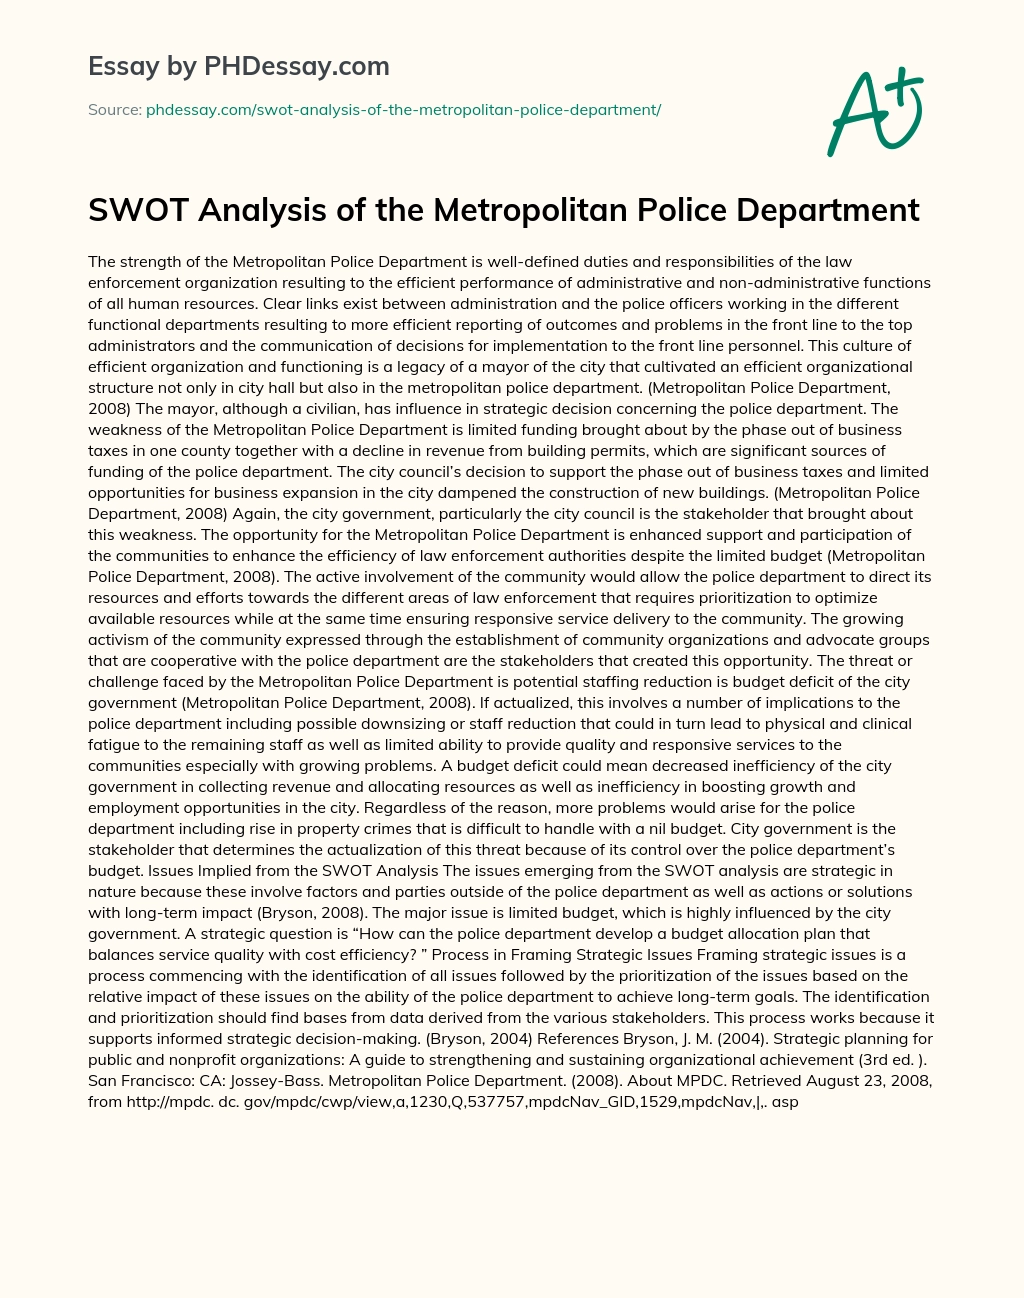 SWOT Analysis of the Metropolitan Police Department essay